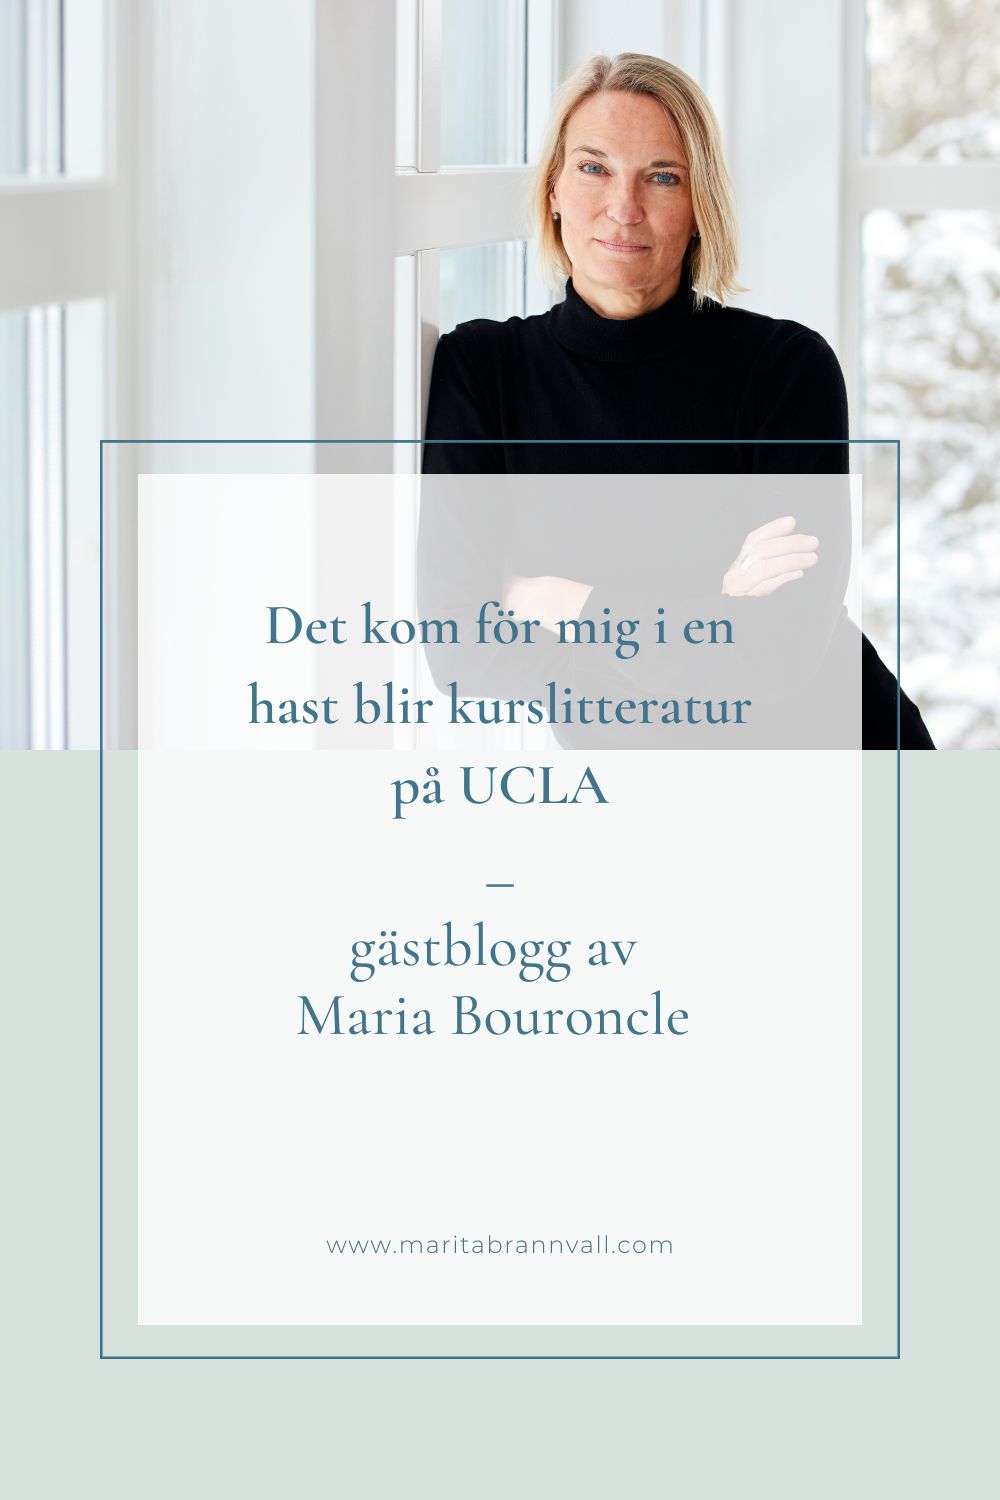 Maria Bouroncle